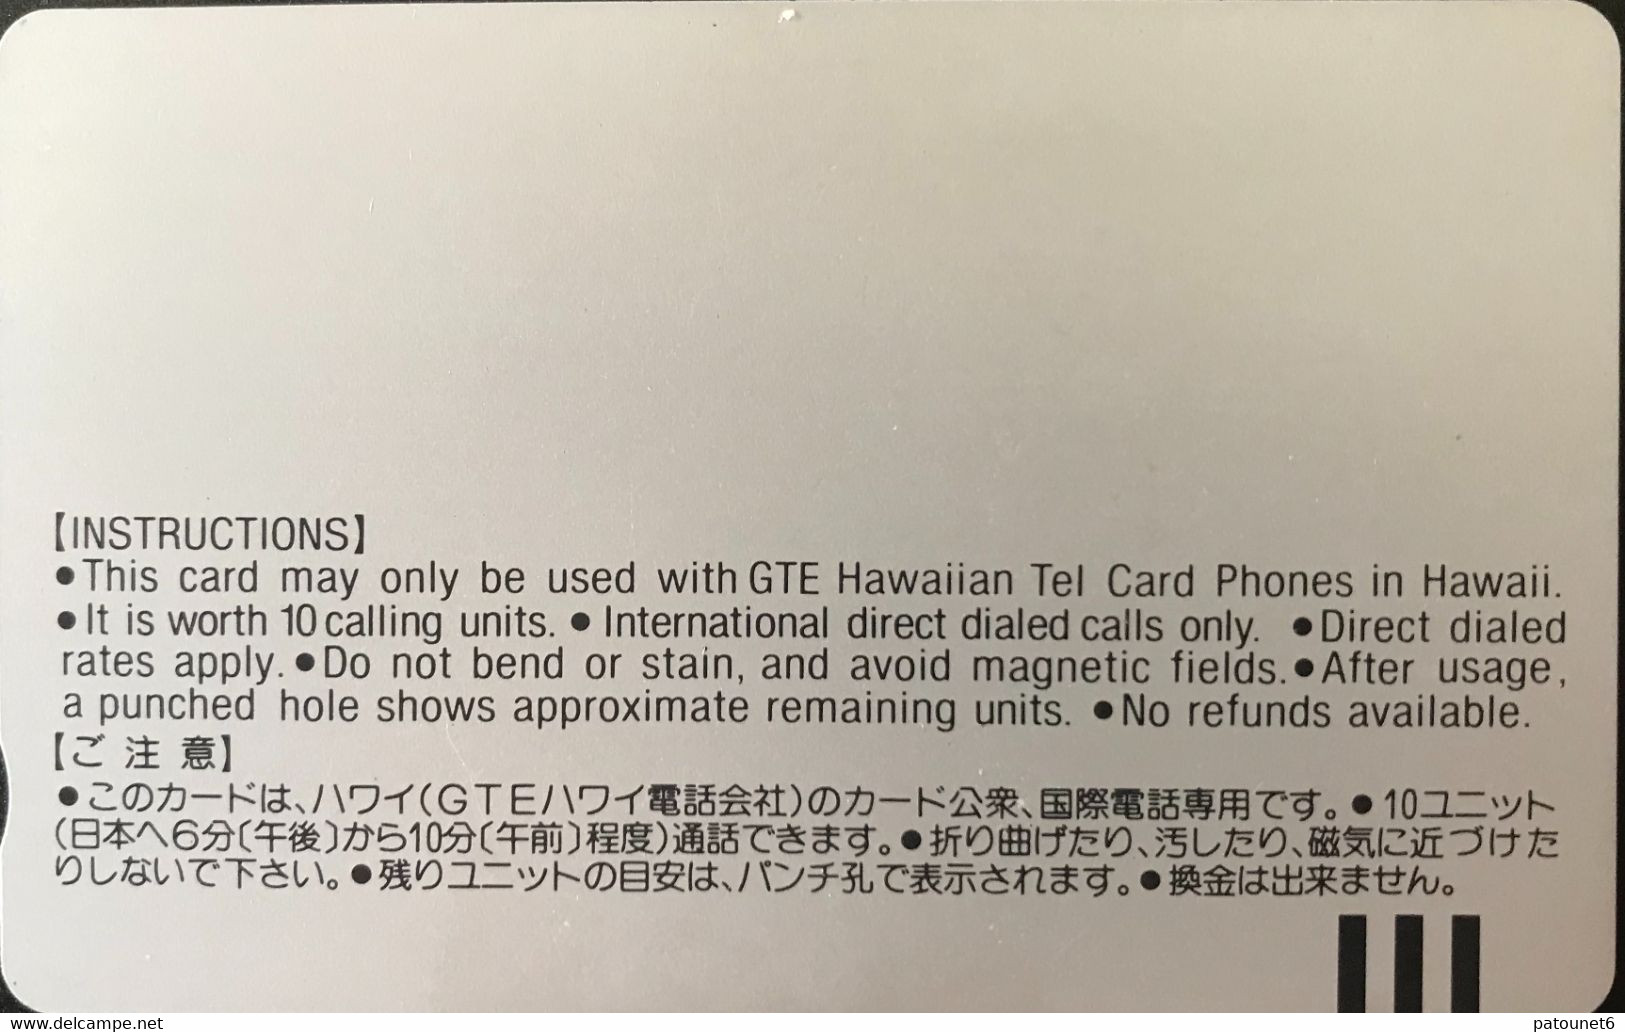 HAWAÏ  -  Phonecard  -  GTE HAWAIIAN TELEPHONE - Waikiki Beach - Card 10 - Hawaii